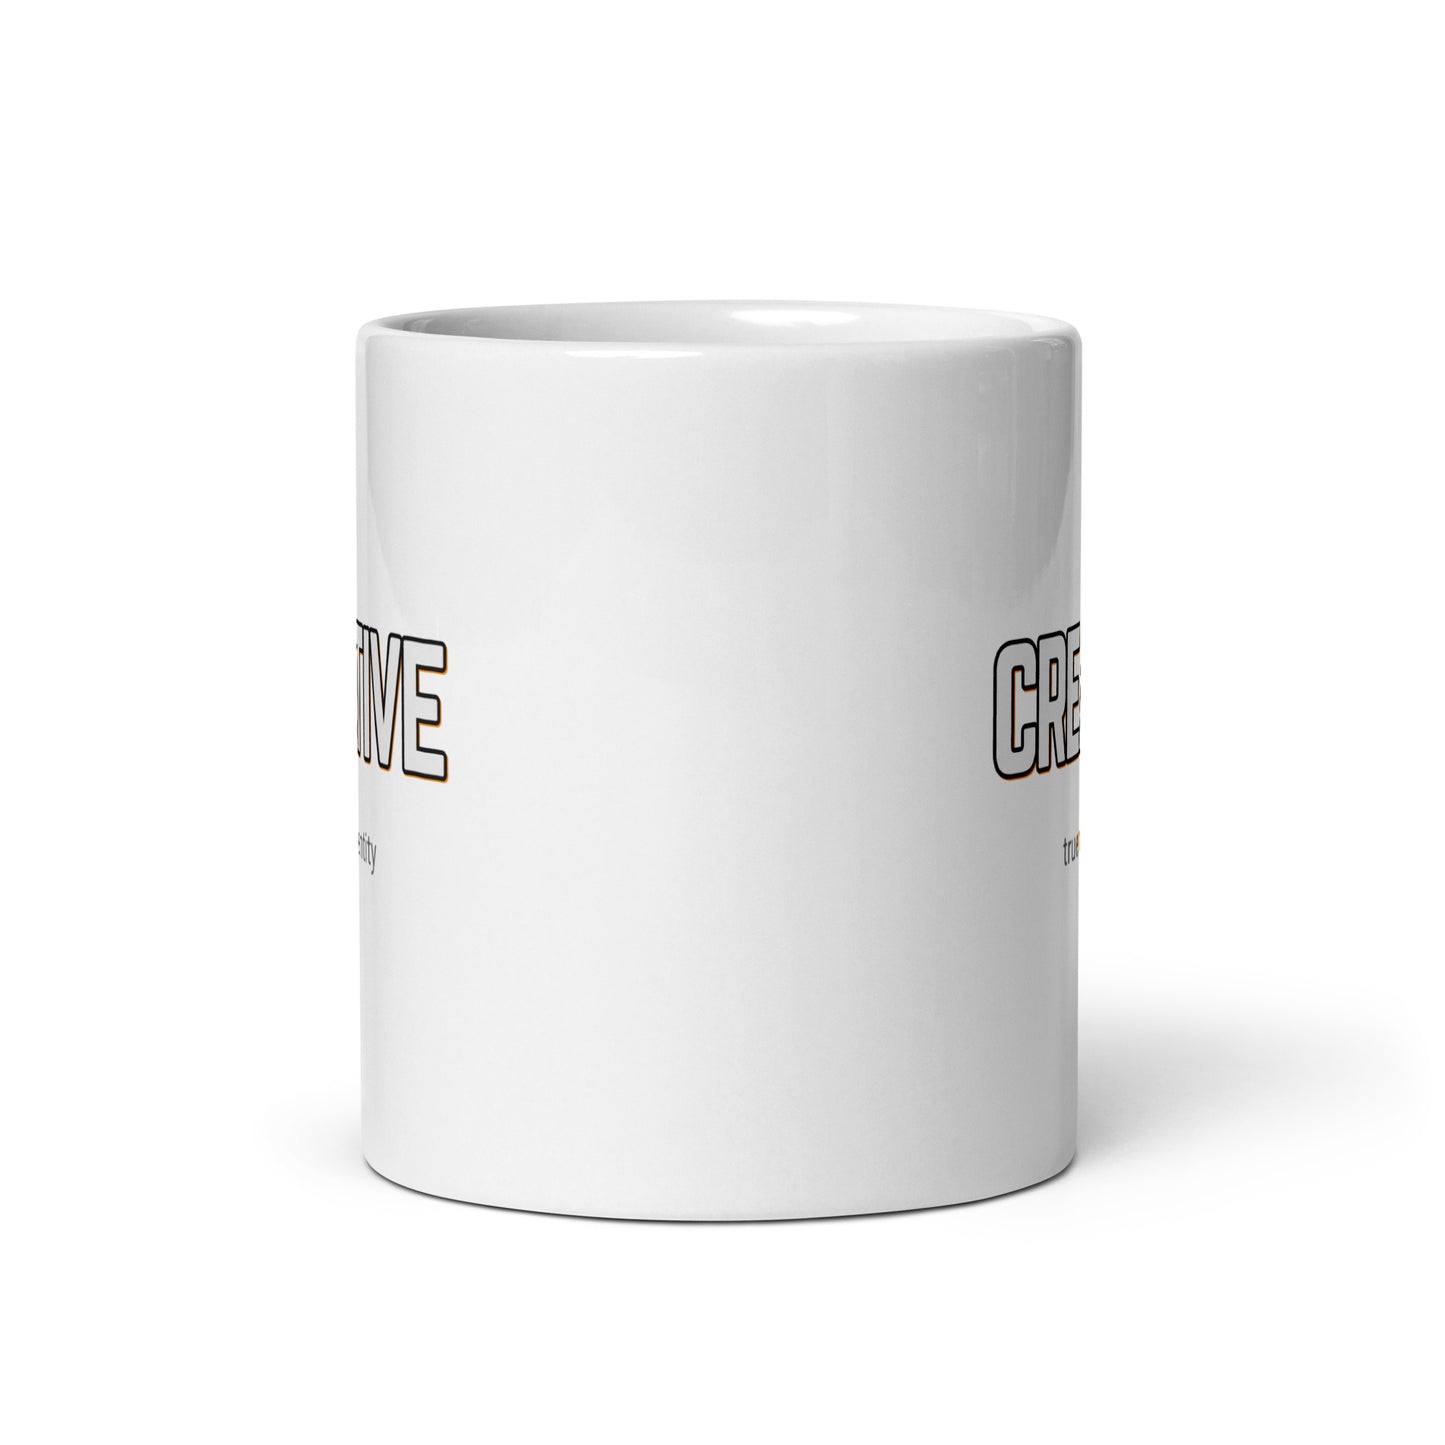 CREATIVE White Coffee Mug Bold 11 oz or 15 oz